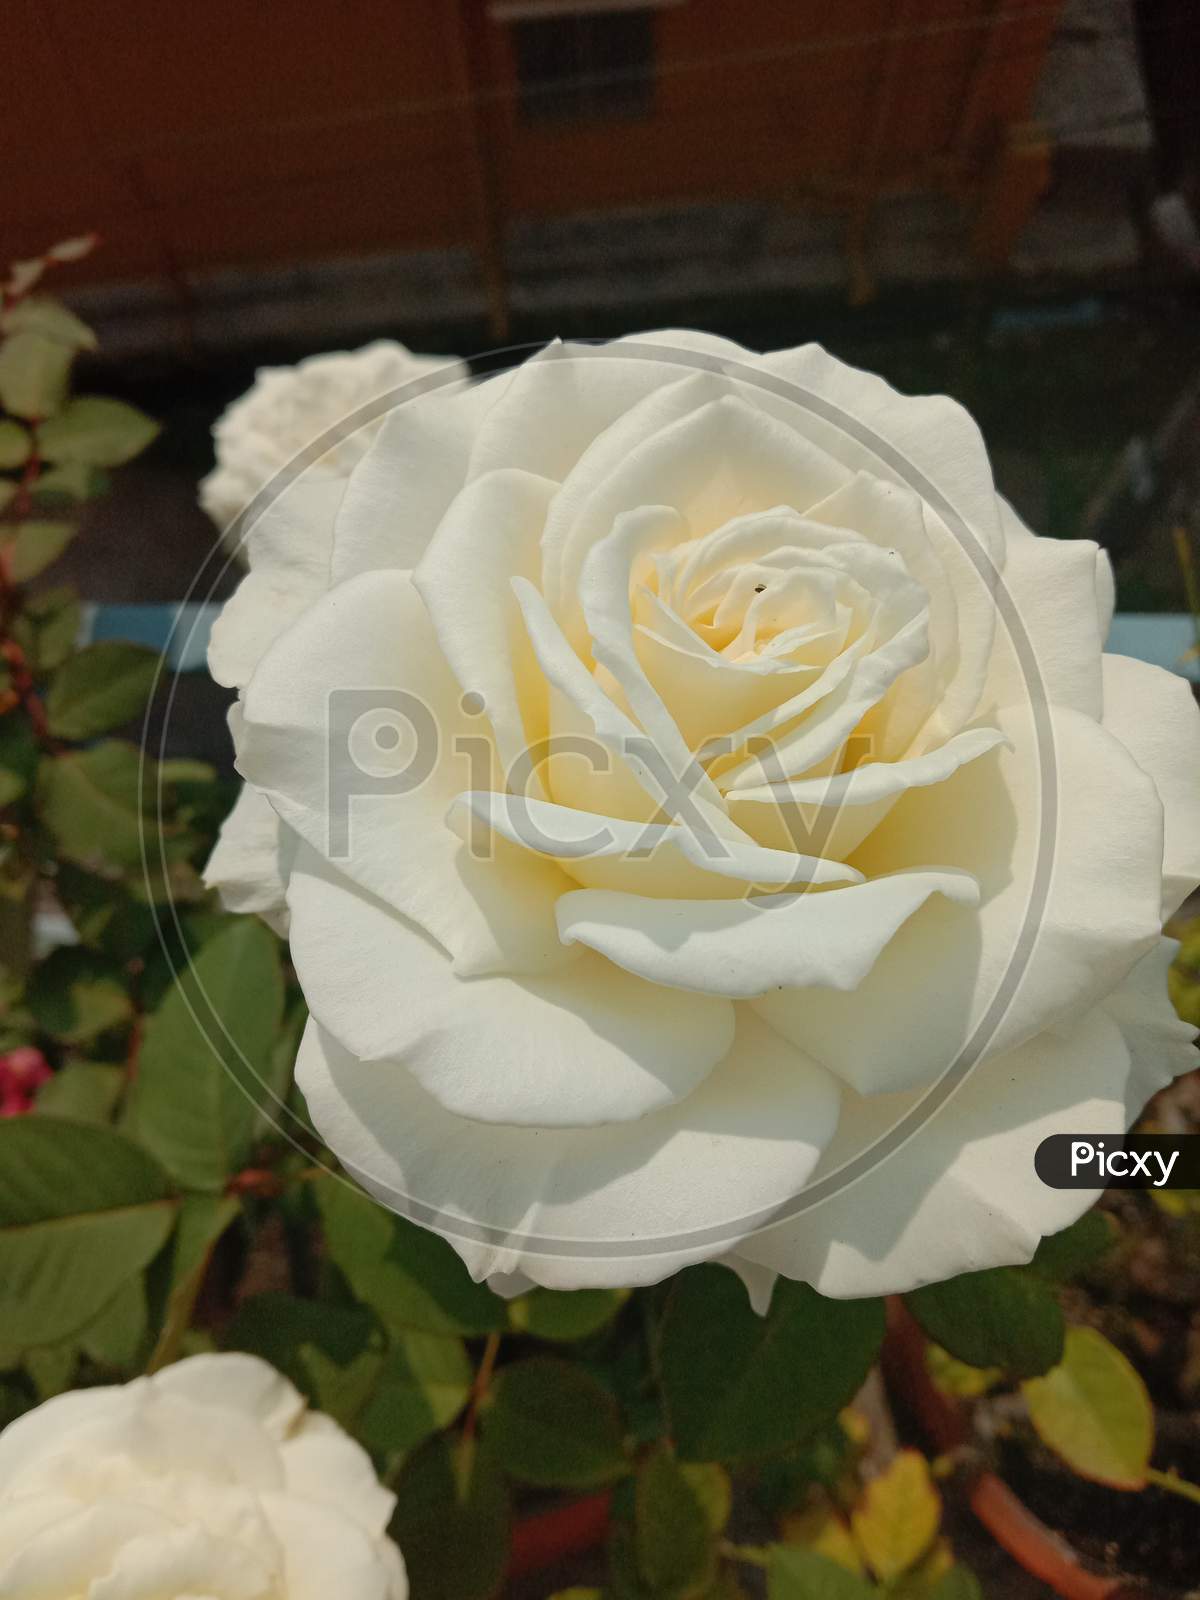 Bright white rose